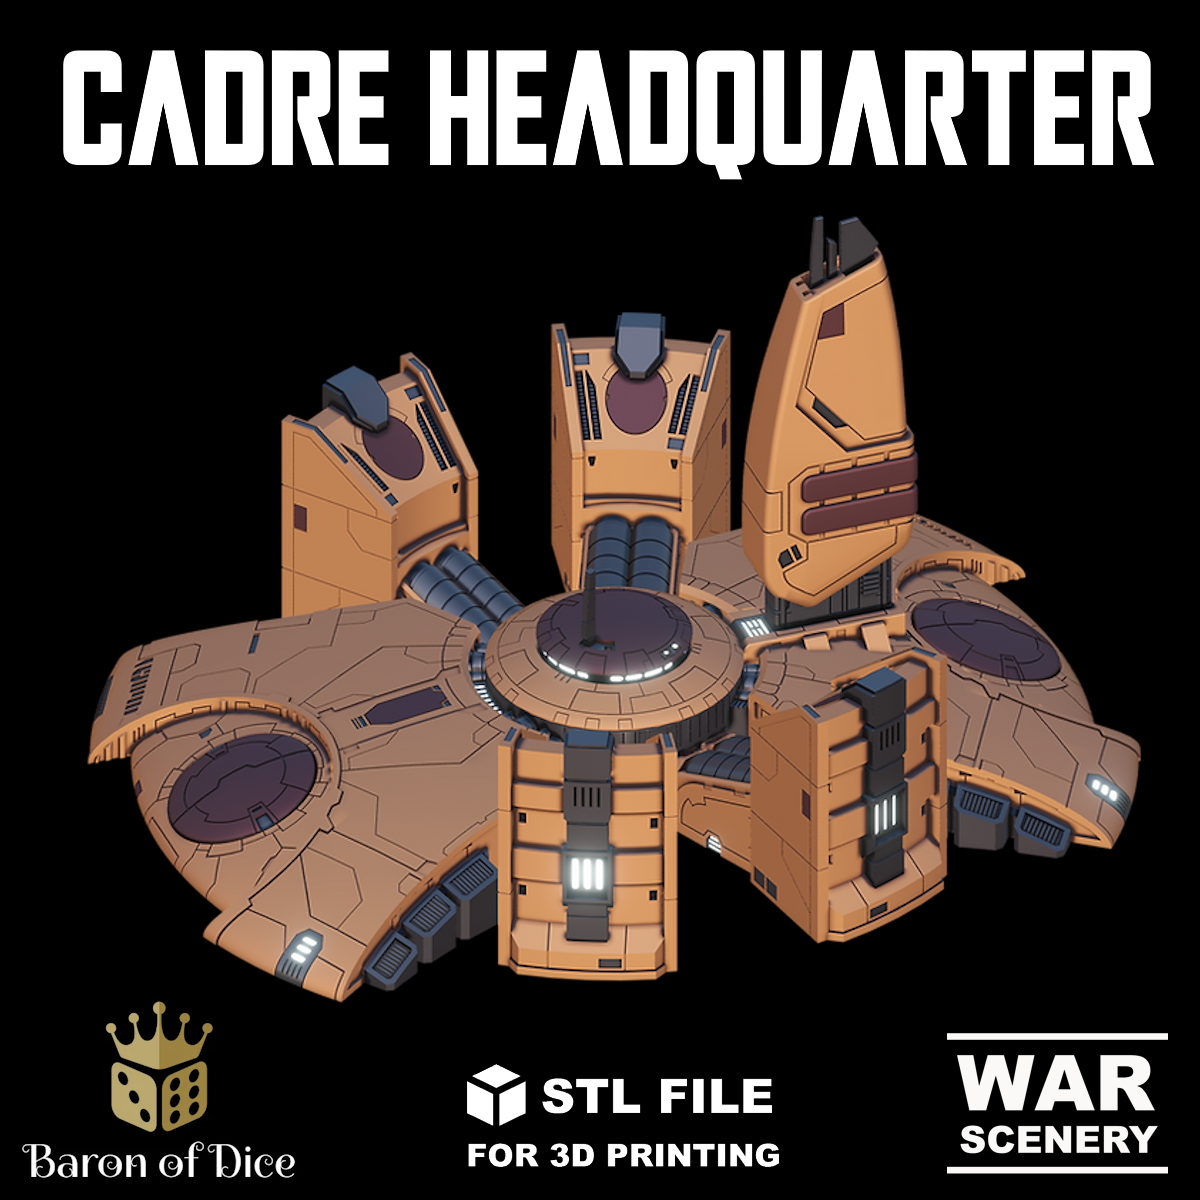 Cadre Headquarter, STL File